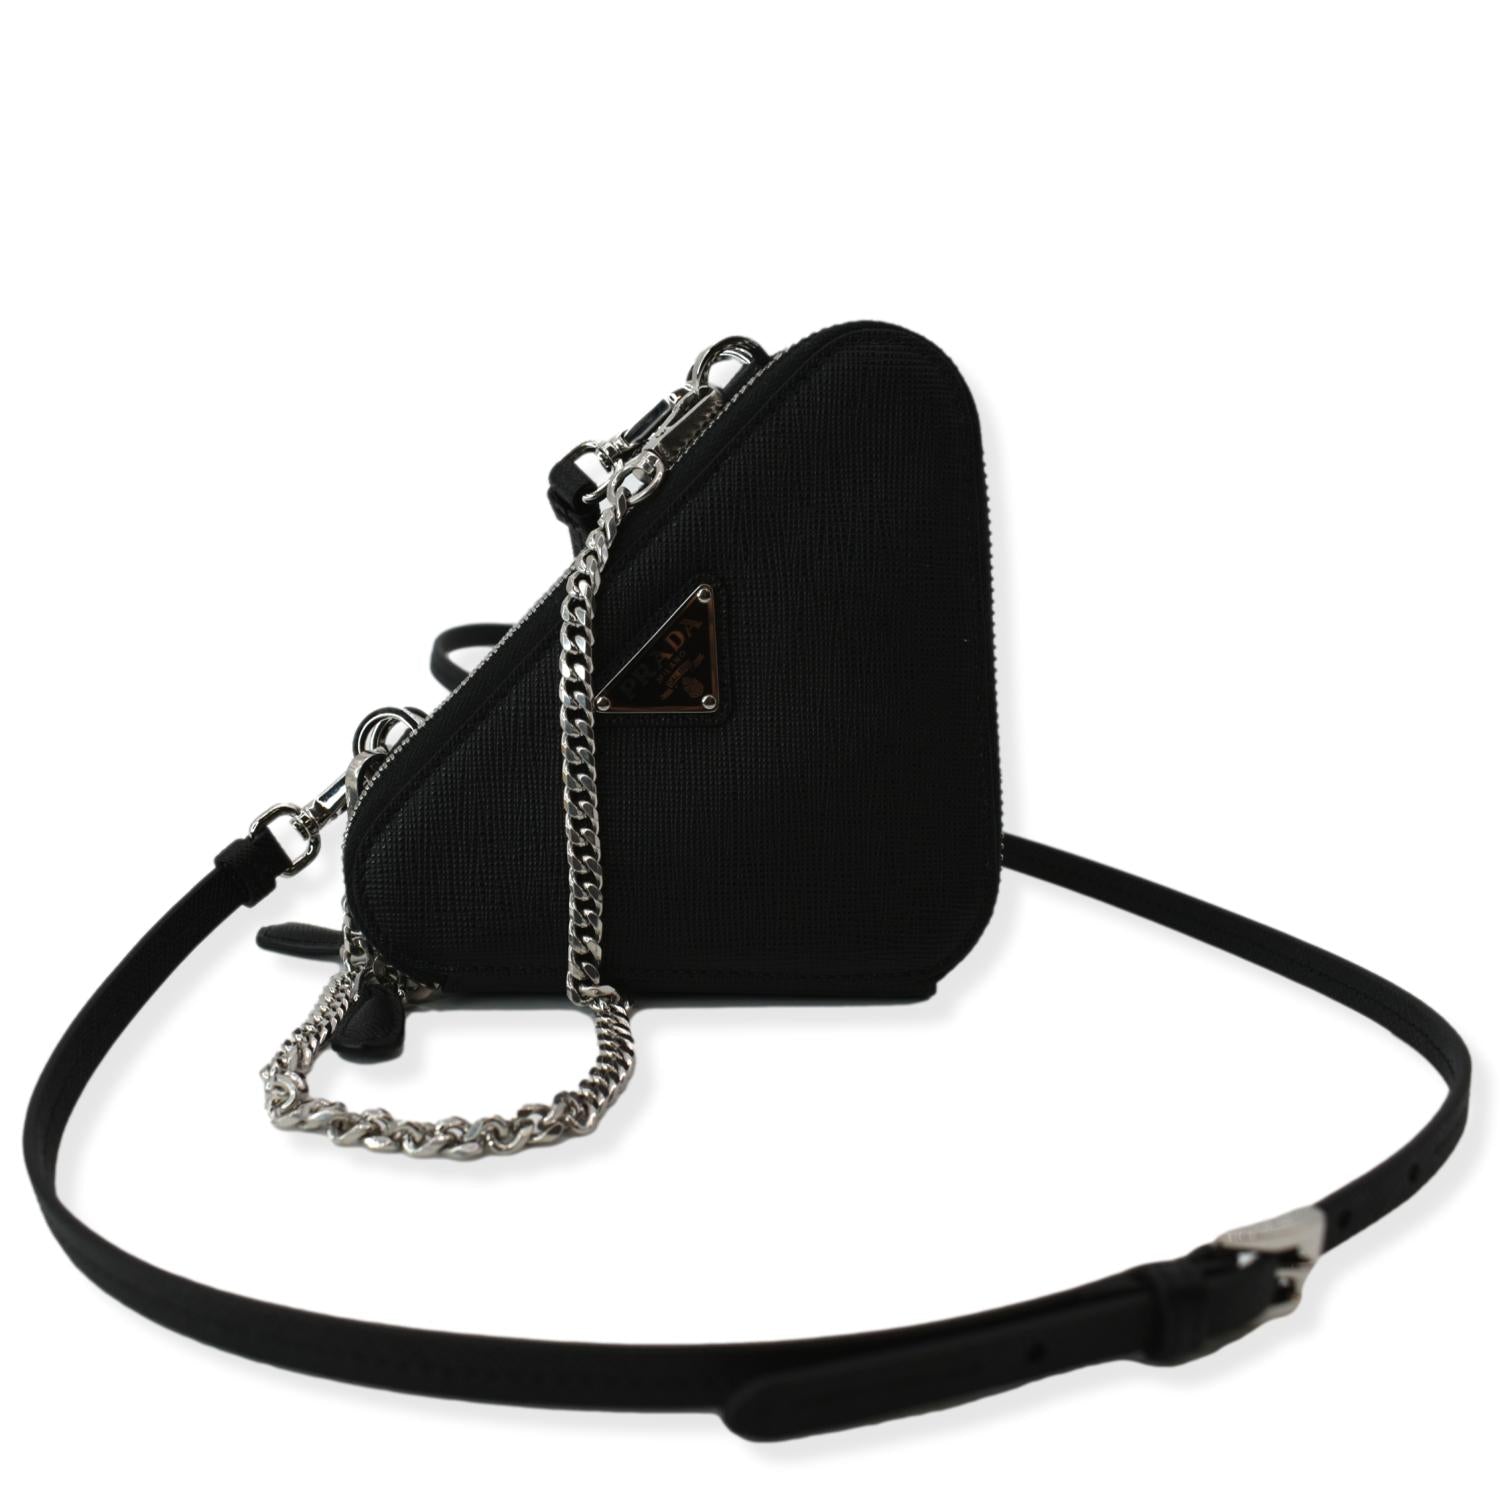 Black Triangle mini leather cross-body bag, Prada